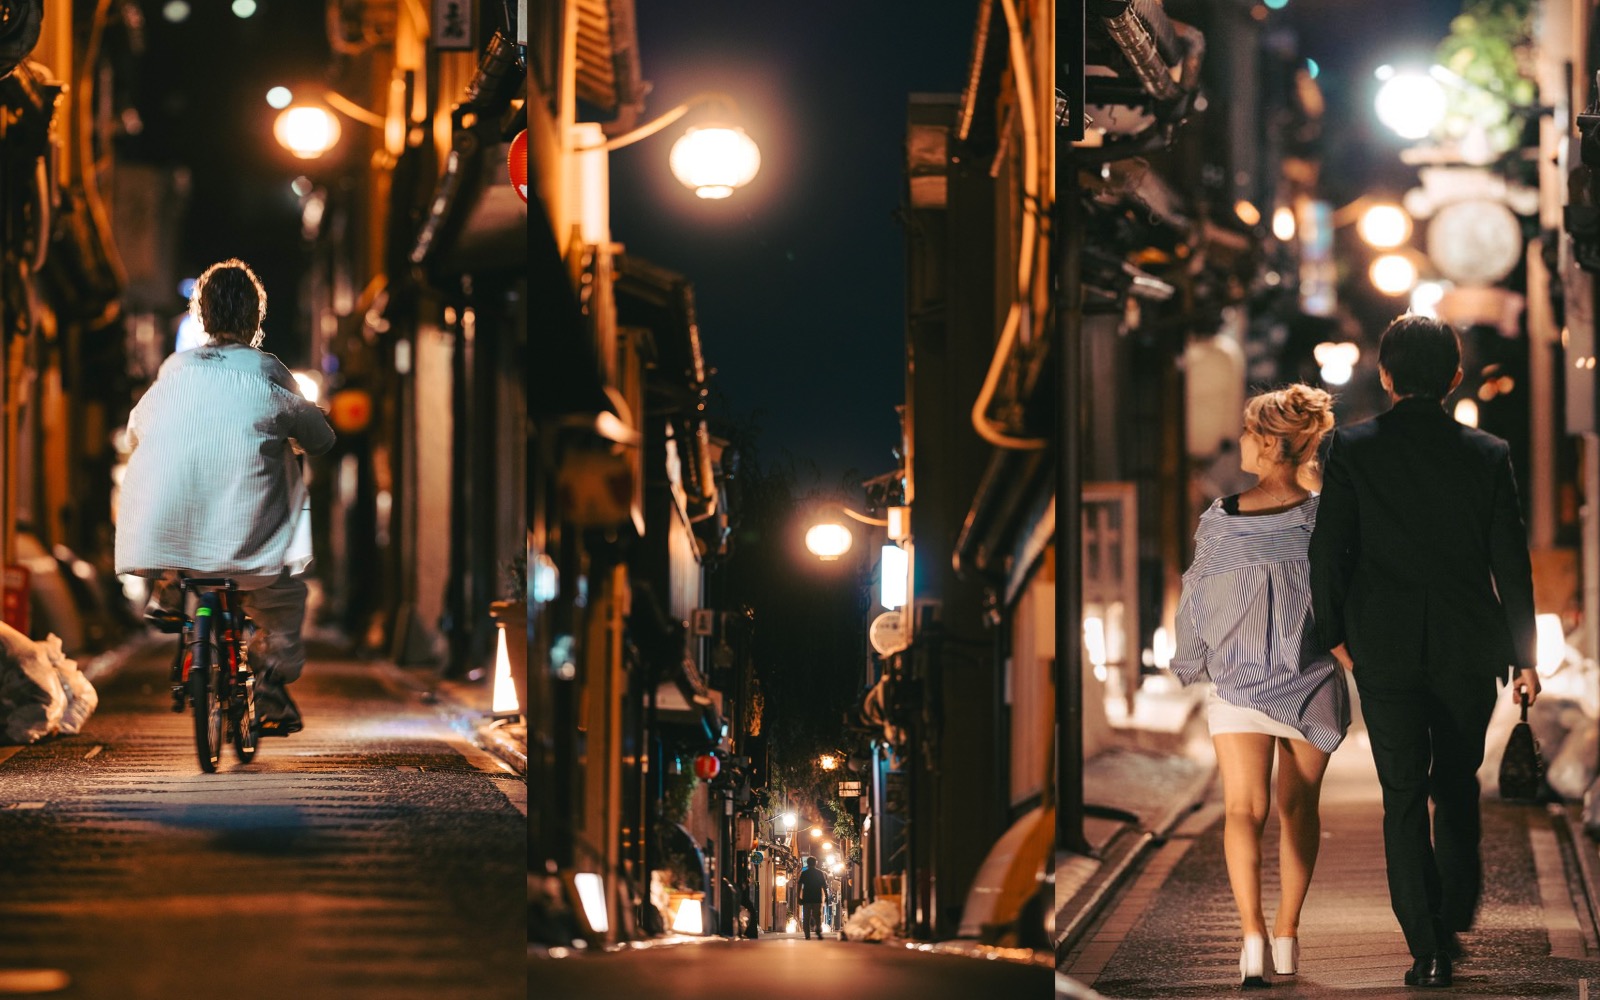 Kyoto Street Photography at midnight